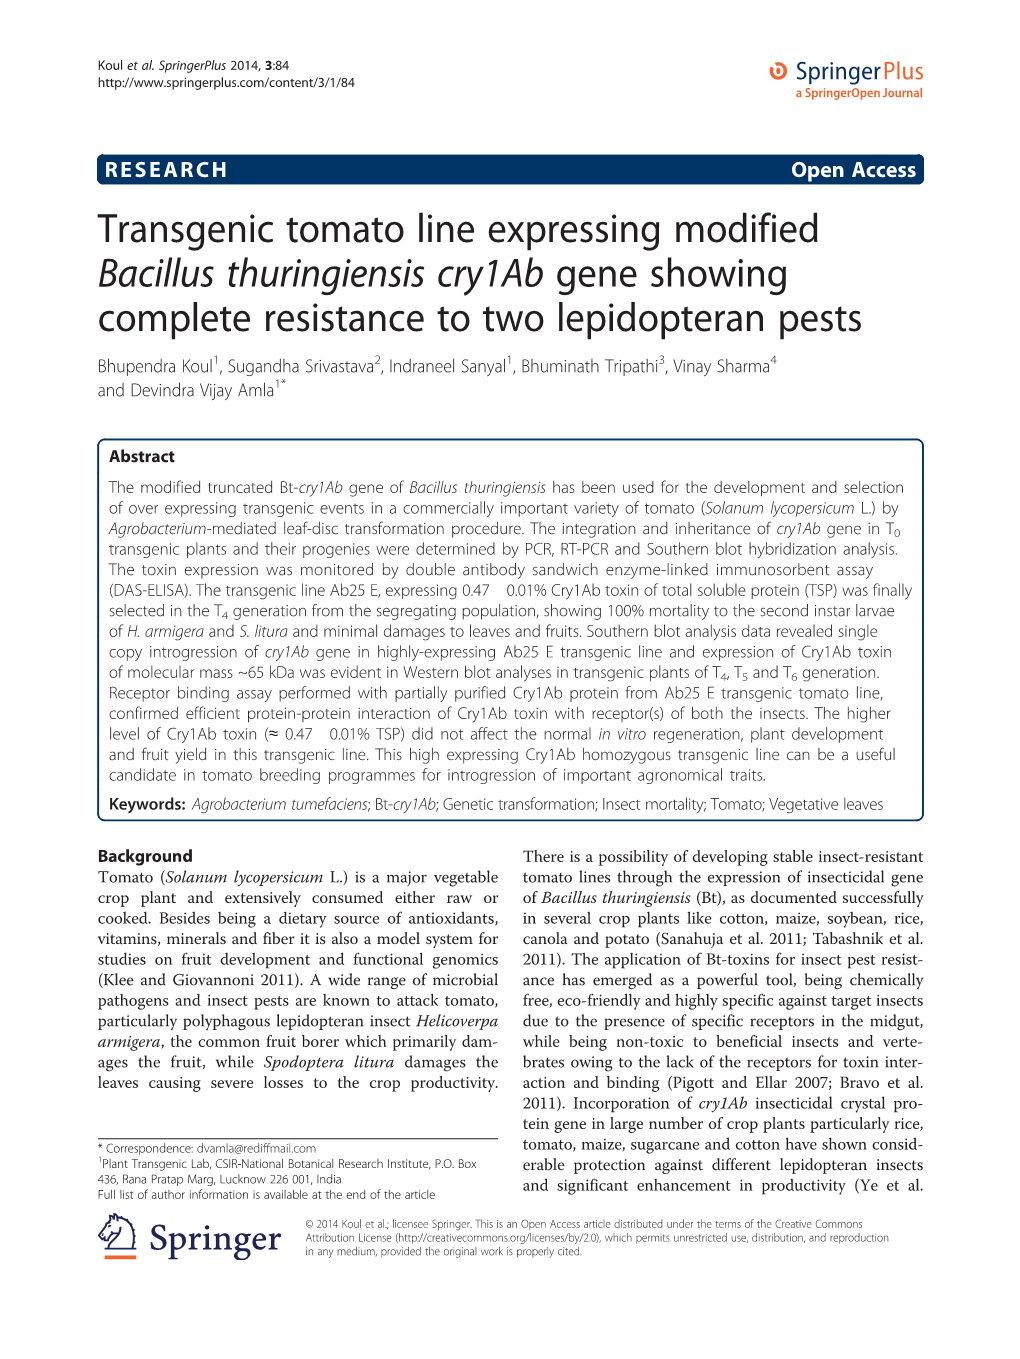 Transgenic Tomato Line Expressing Modified Bacillus Thuringiensis